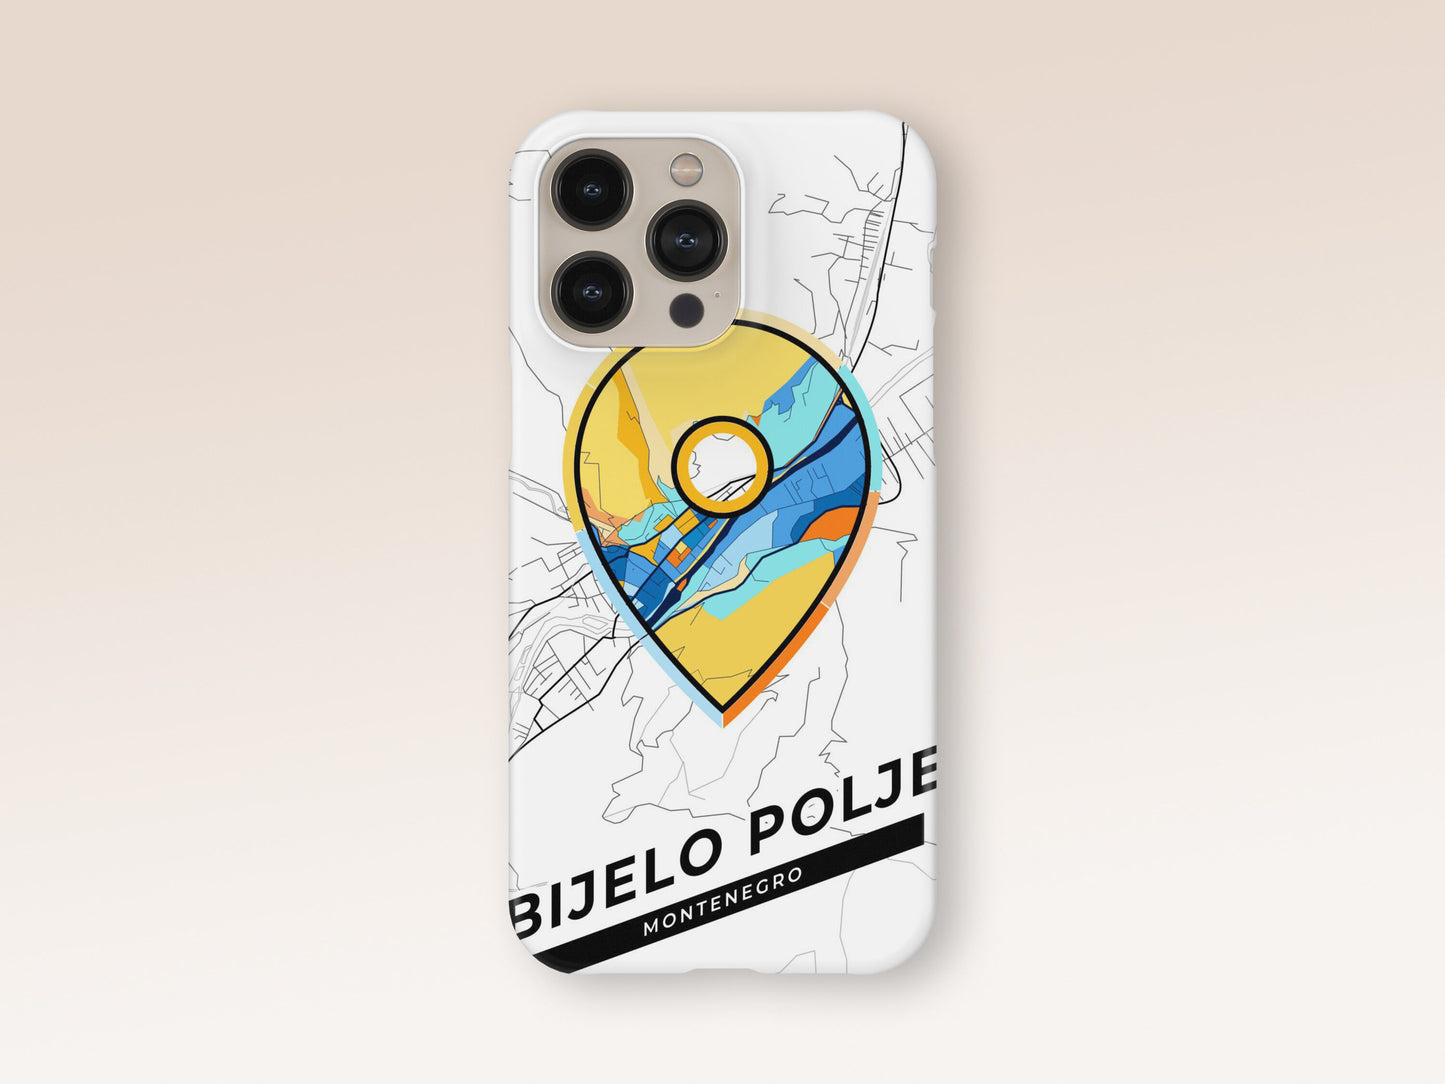 Bijelo Polje Montenegro slim phone case with colorful icon. Birthday, wedding or housewarming gift. Couple match cases. 1